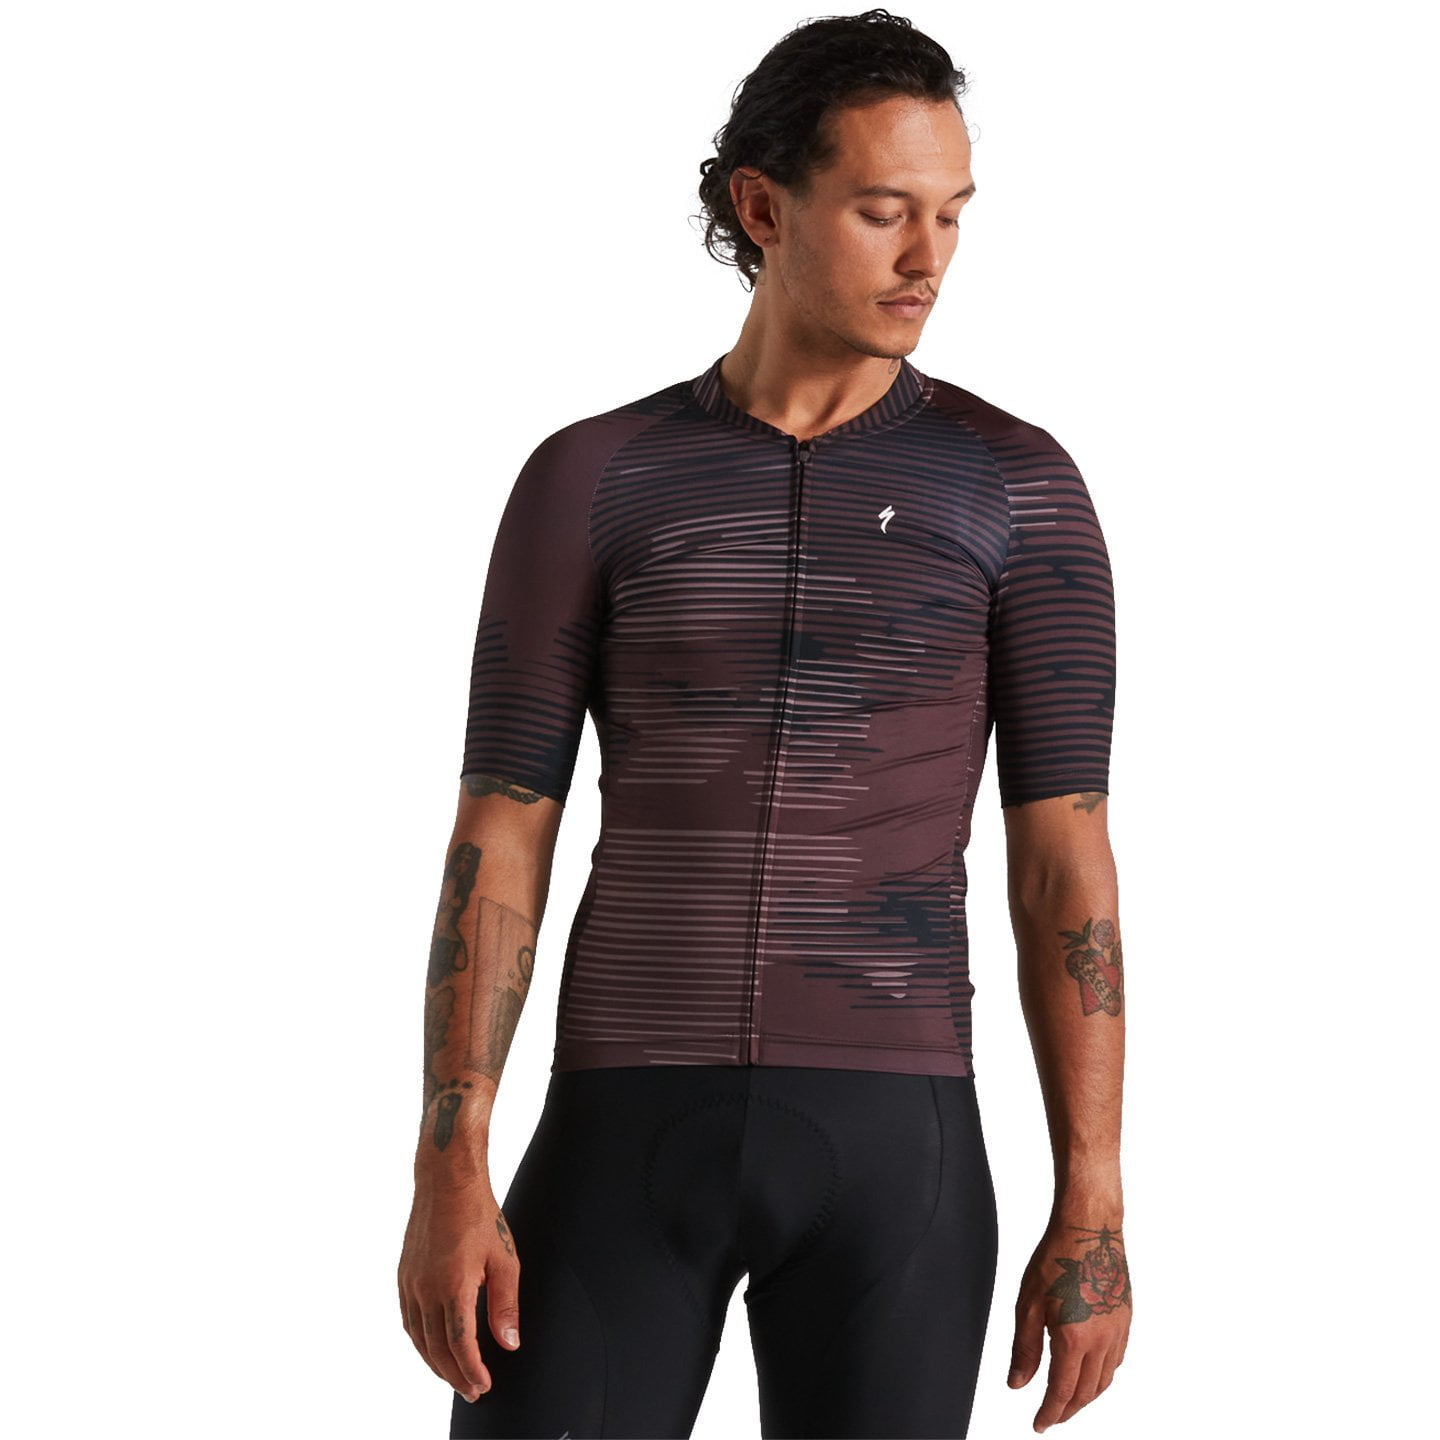 SPECIALIZED SL Blur Short Sleeve Jersey Short Sleeve Jersey, for men, size L, Cycling jersey, Cycling clothing